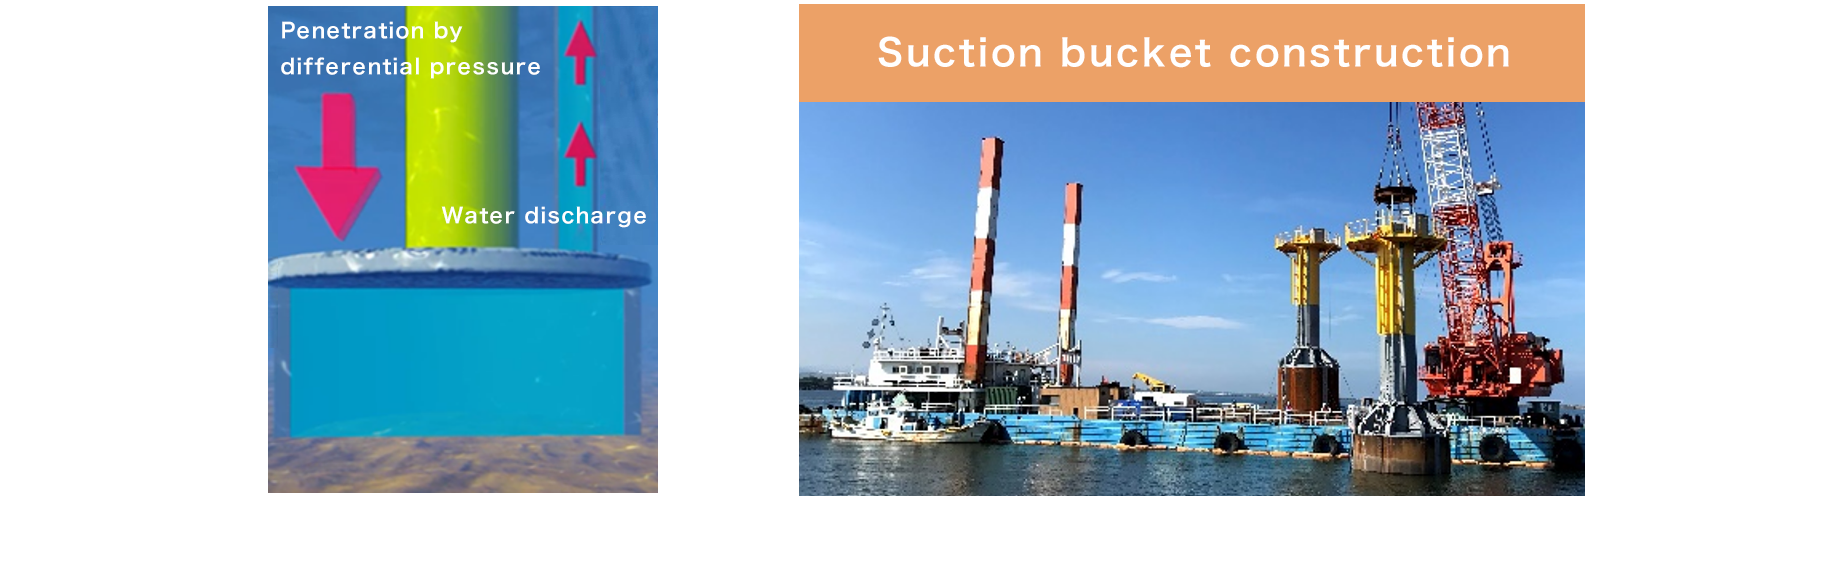 Suction Bucket Foundation